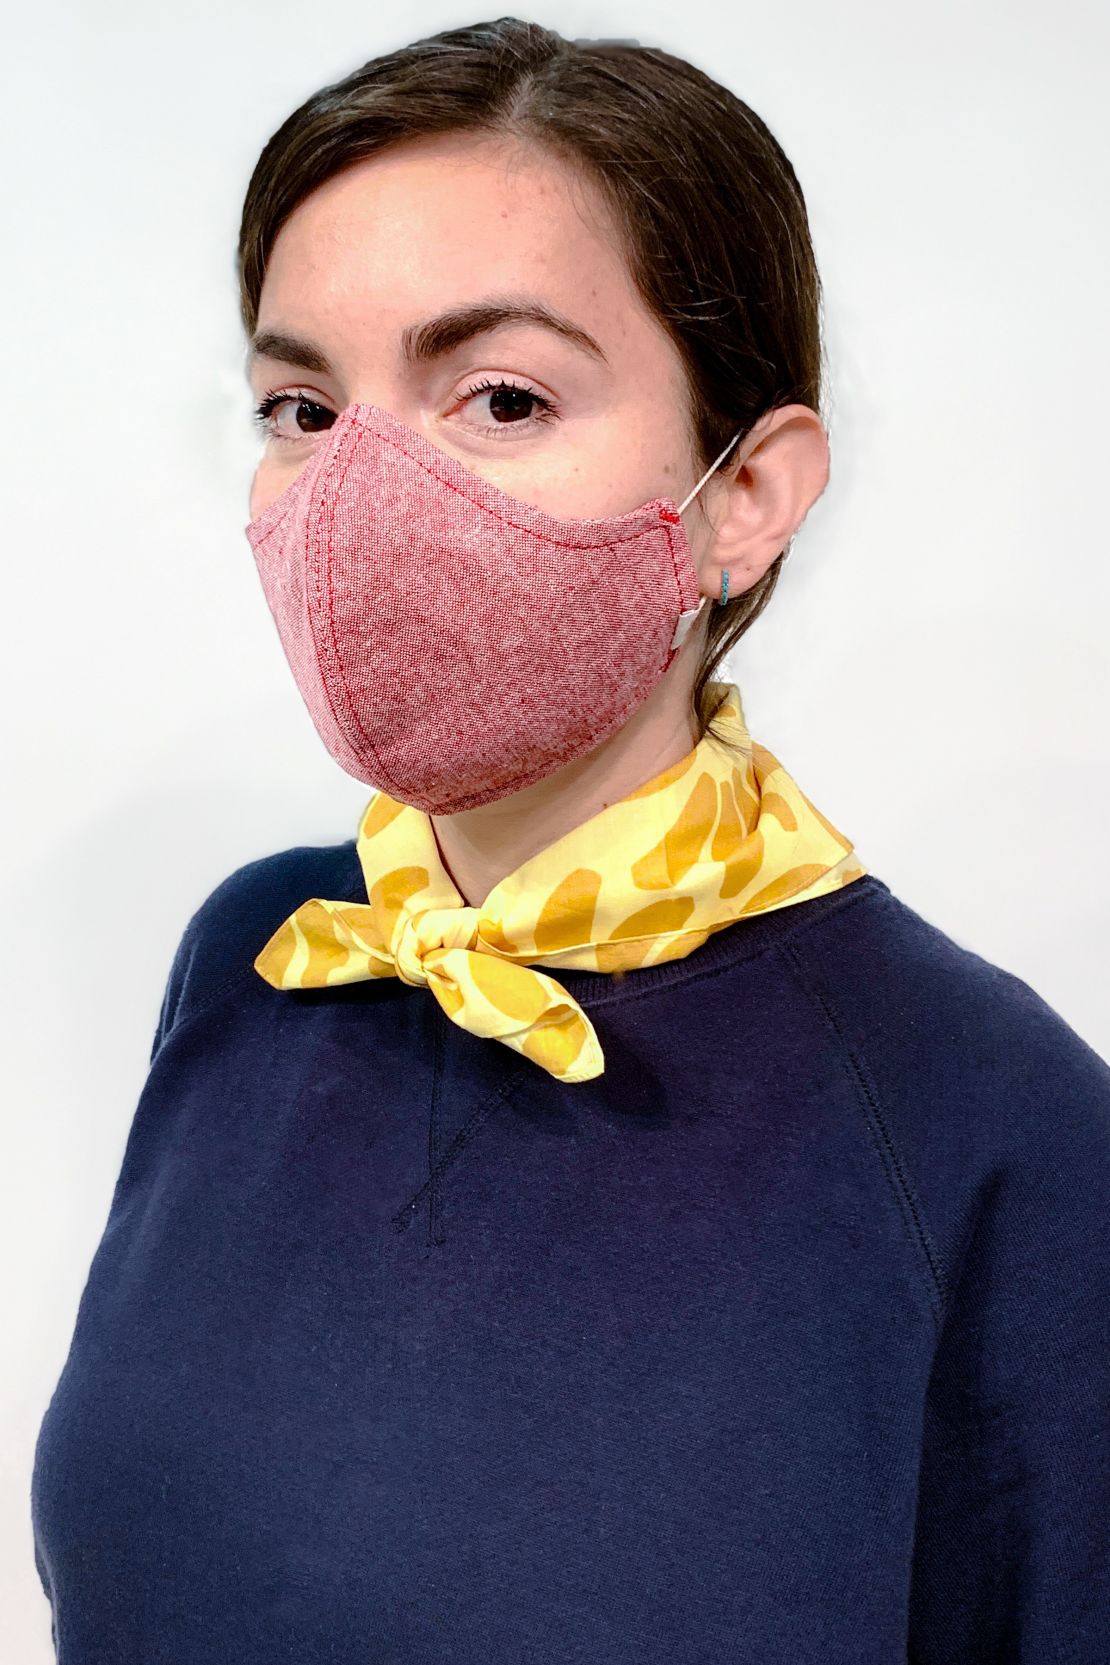 Designer Brandon Maxwell making masks and gowns to fight coronavirus